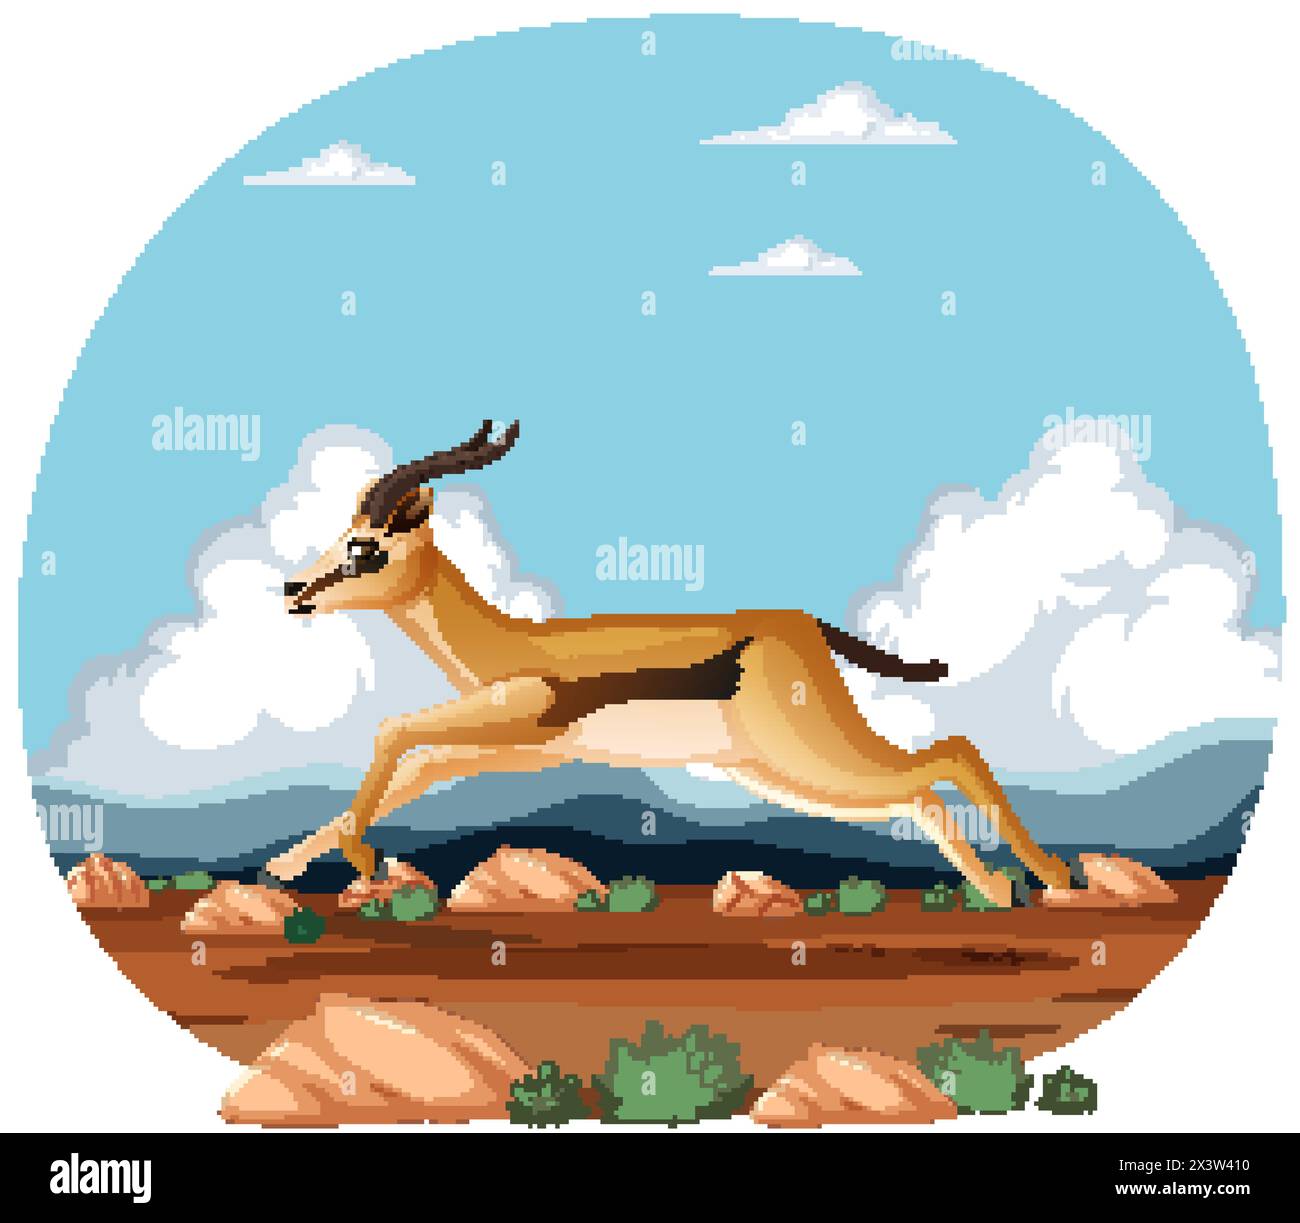 Vector illustration of a gazelle running in nature. Stock Vector